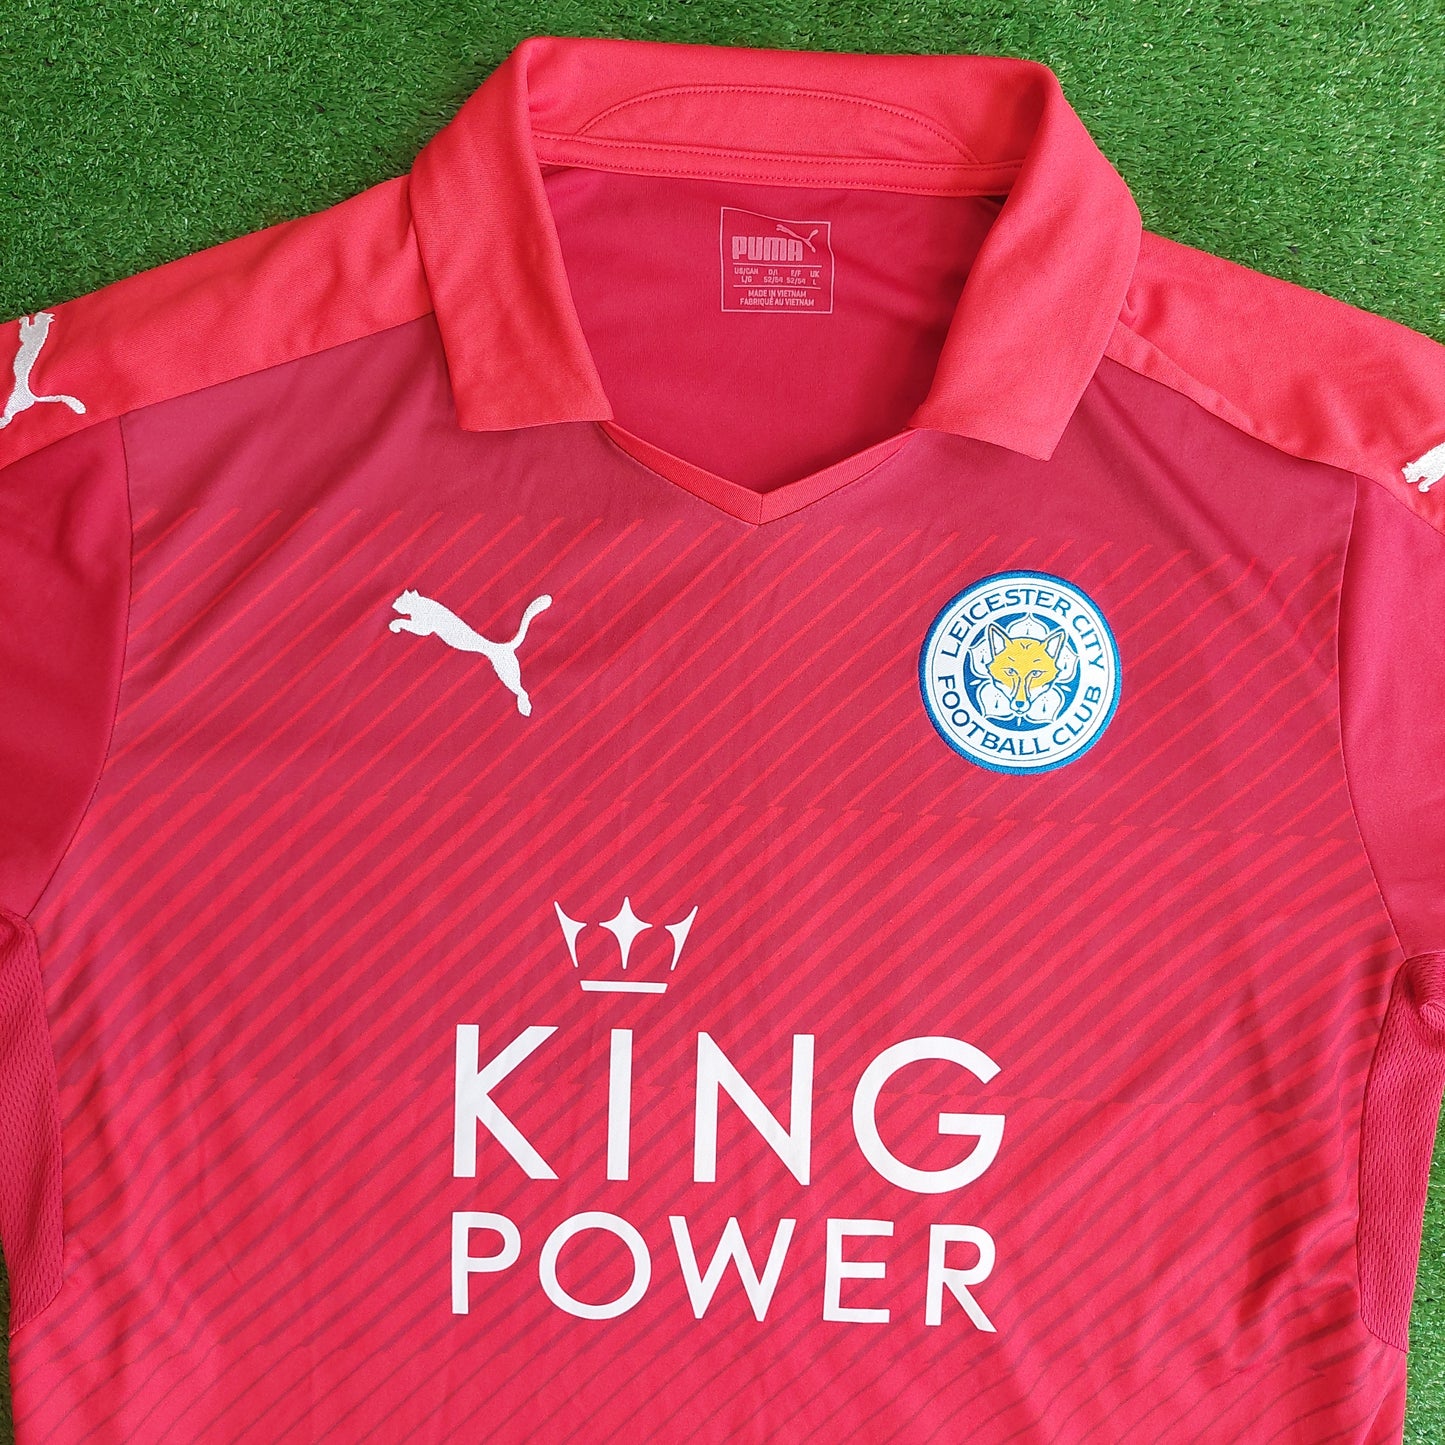 Leicester City 2016/17 Away Shirt (Excellent) - Size L